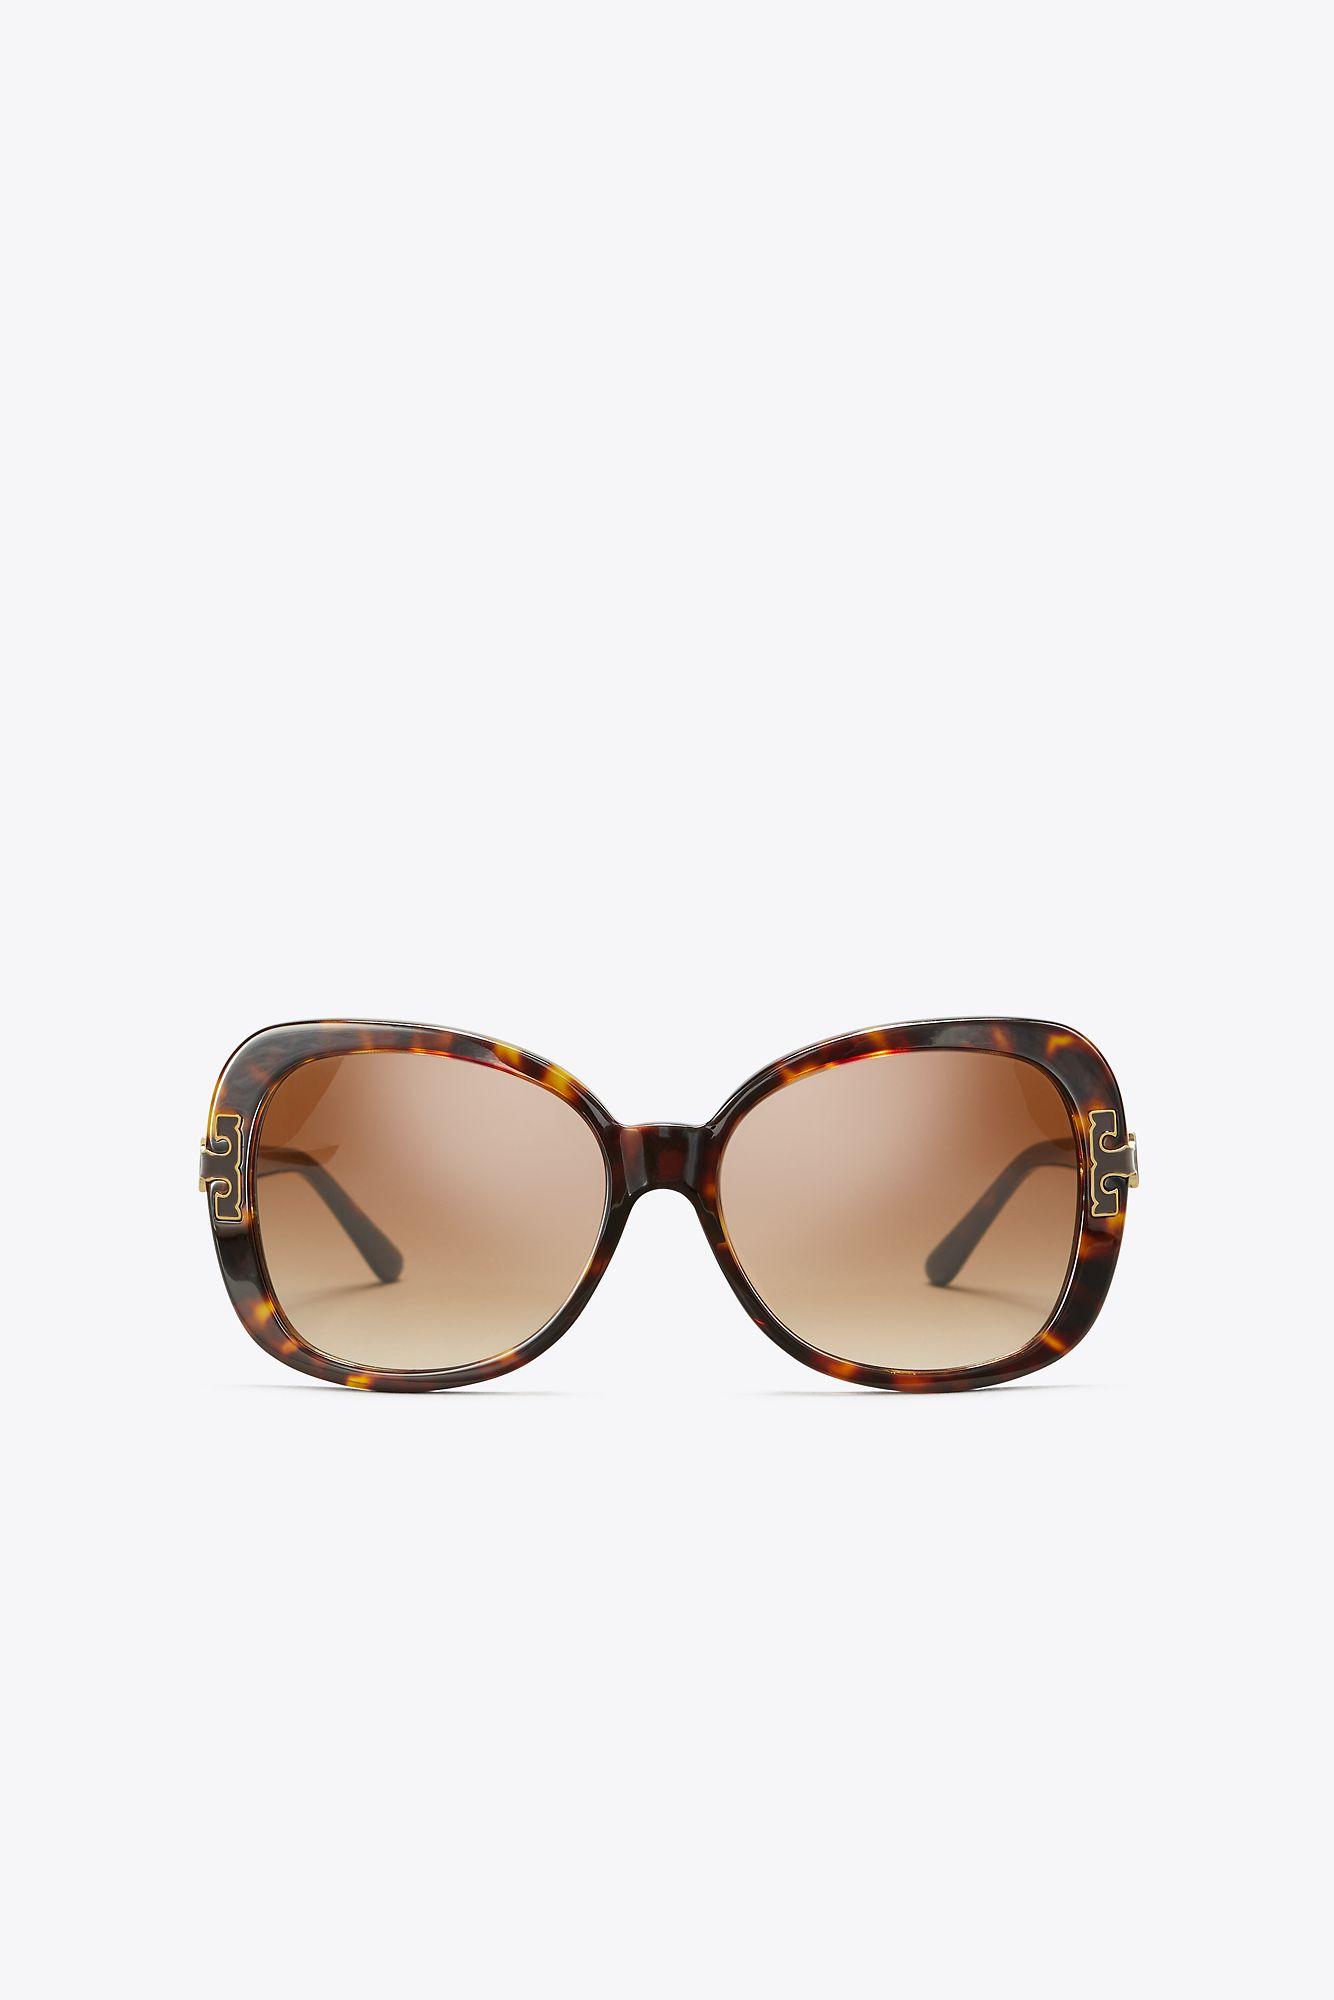 Tory Burch T-temple Butterfly Sunglasses in Dark Tortoise (Brown) - Lyst